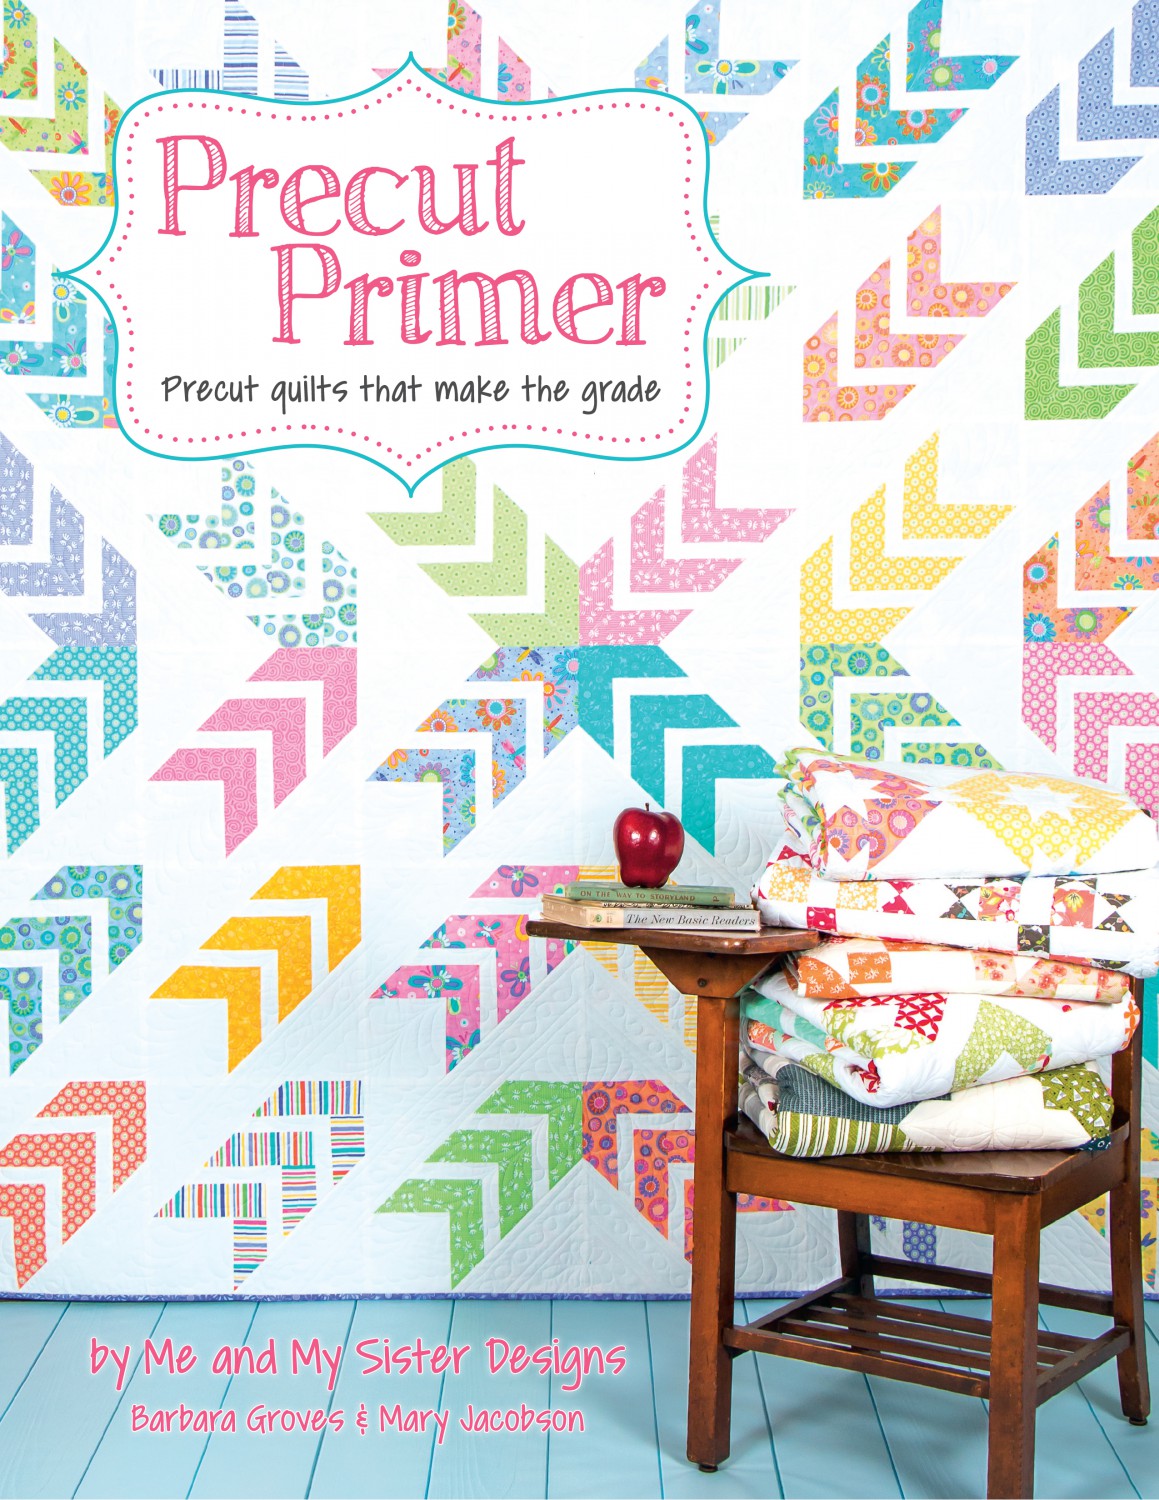 Precut Primer: Precut quilts that make the grade